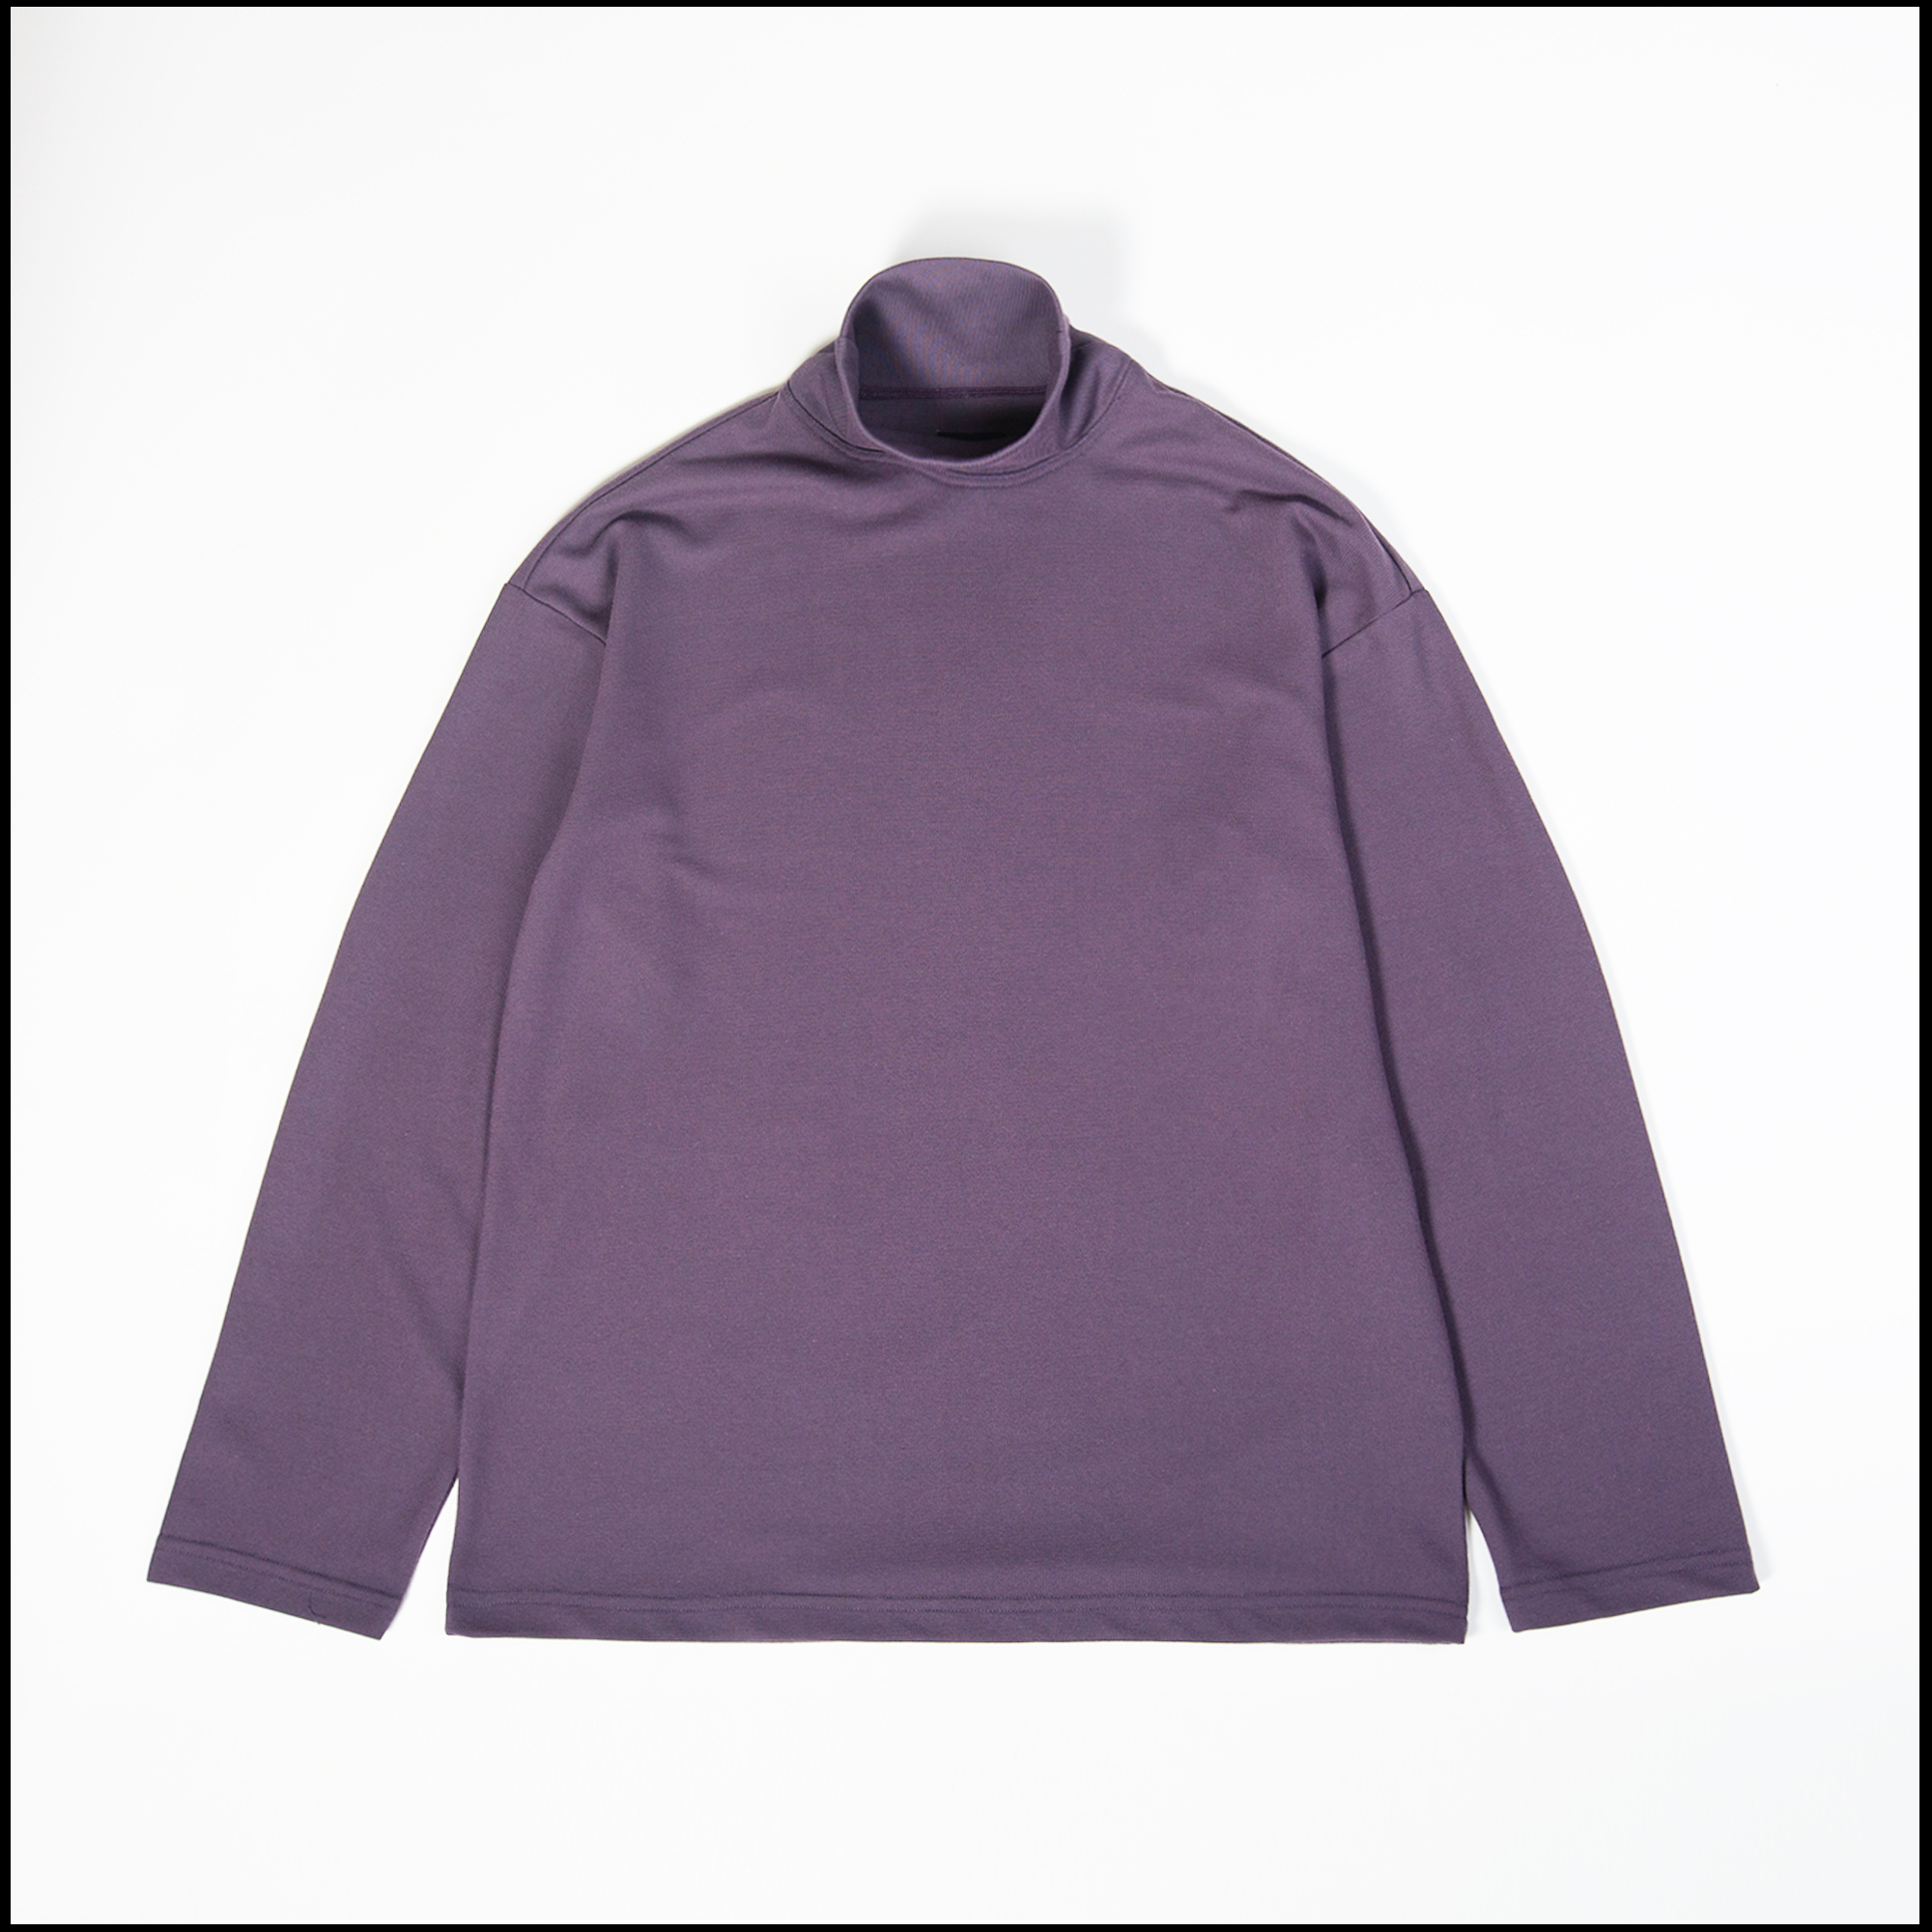 ORLO t-shirt in Purple color by Arpenteur